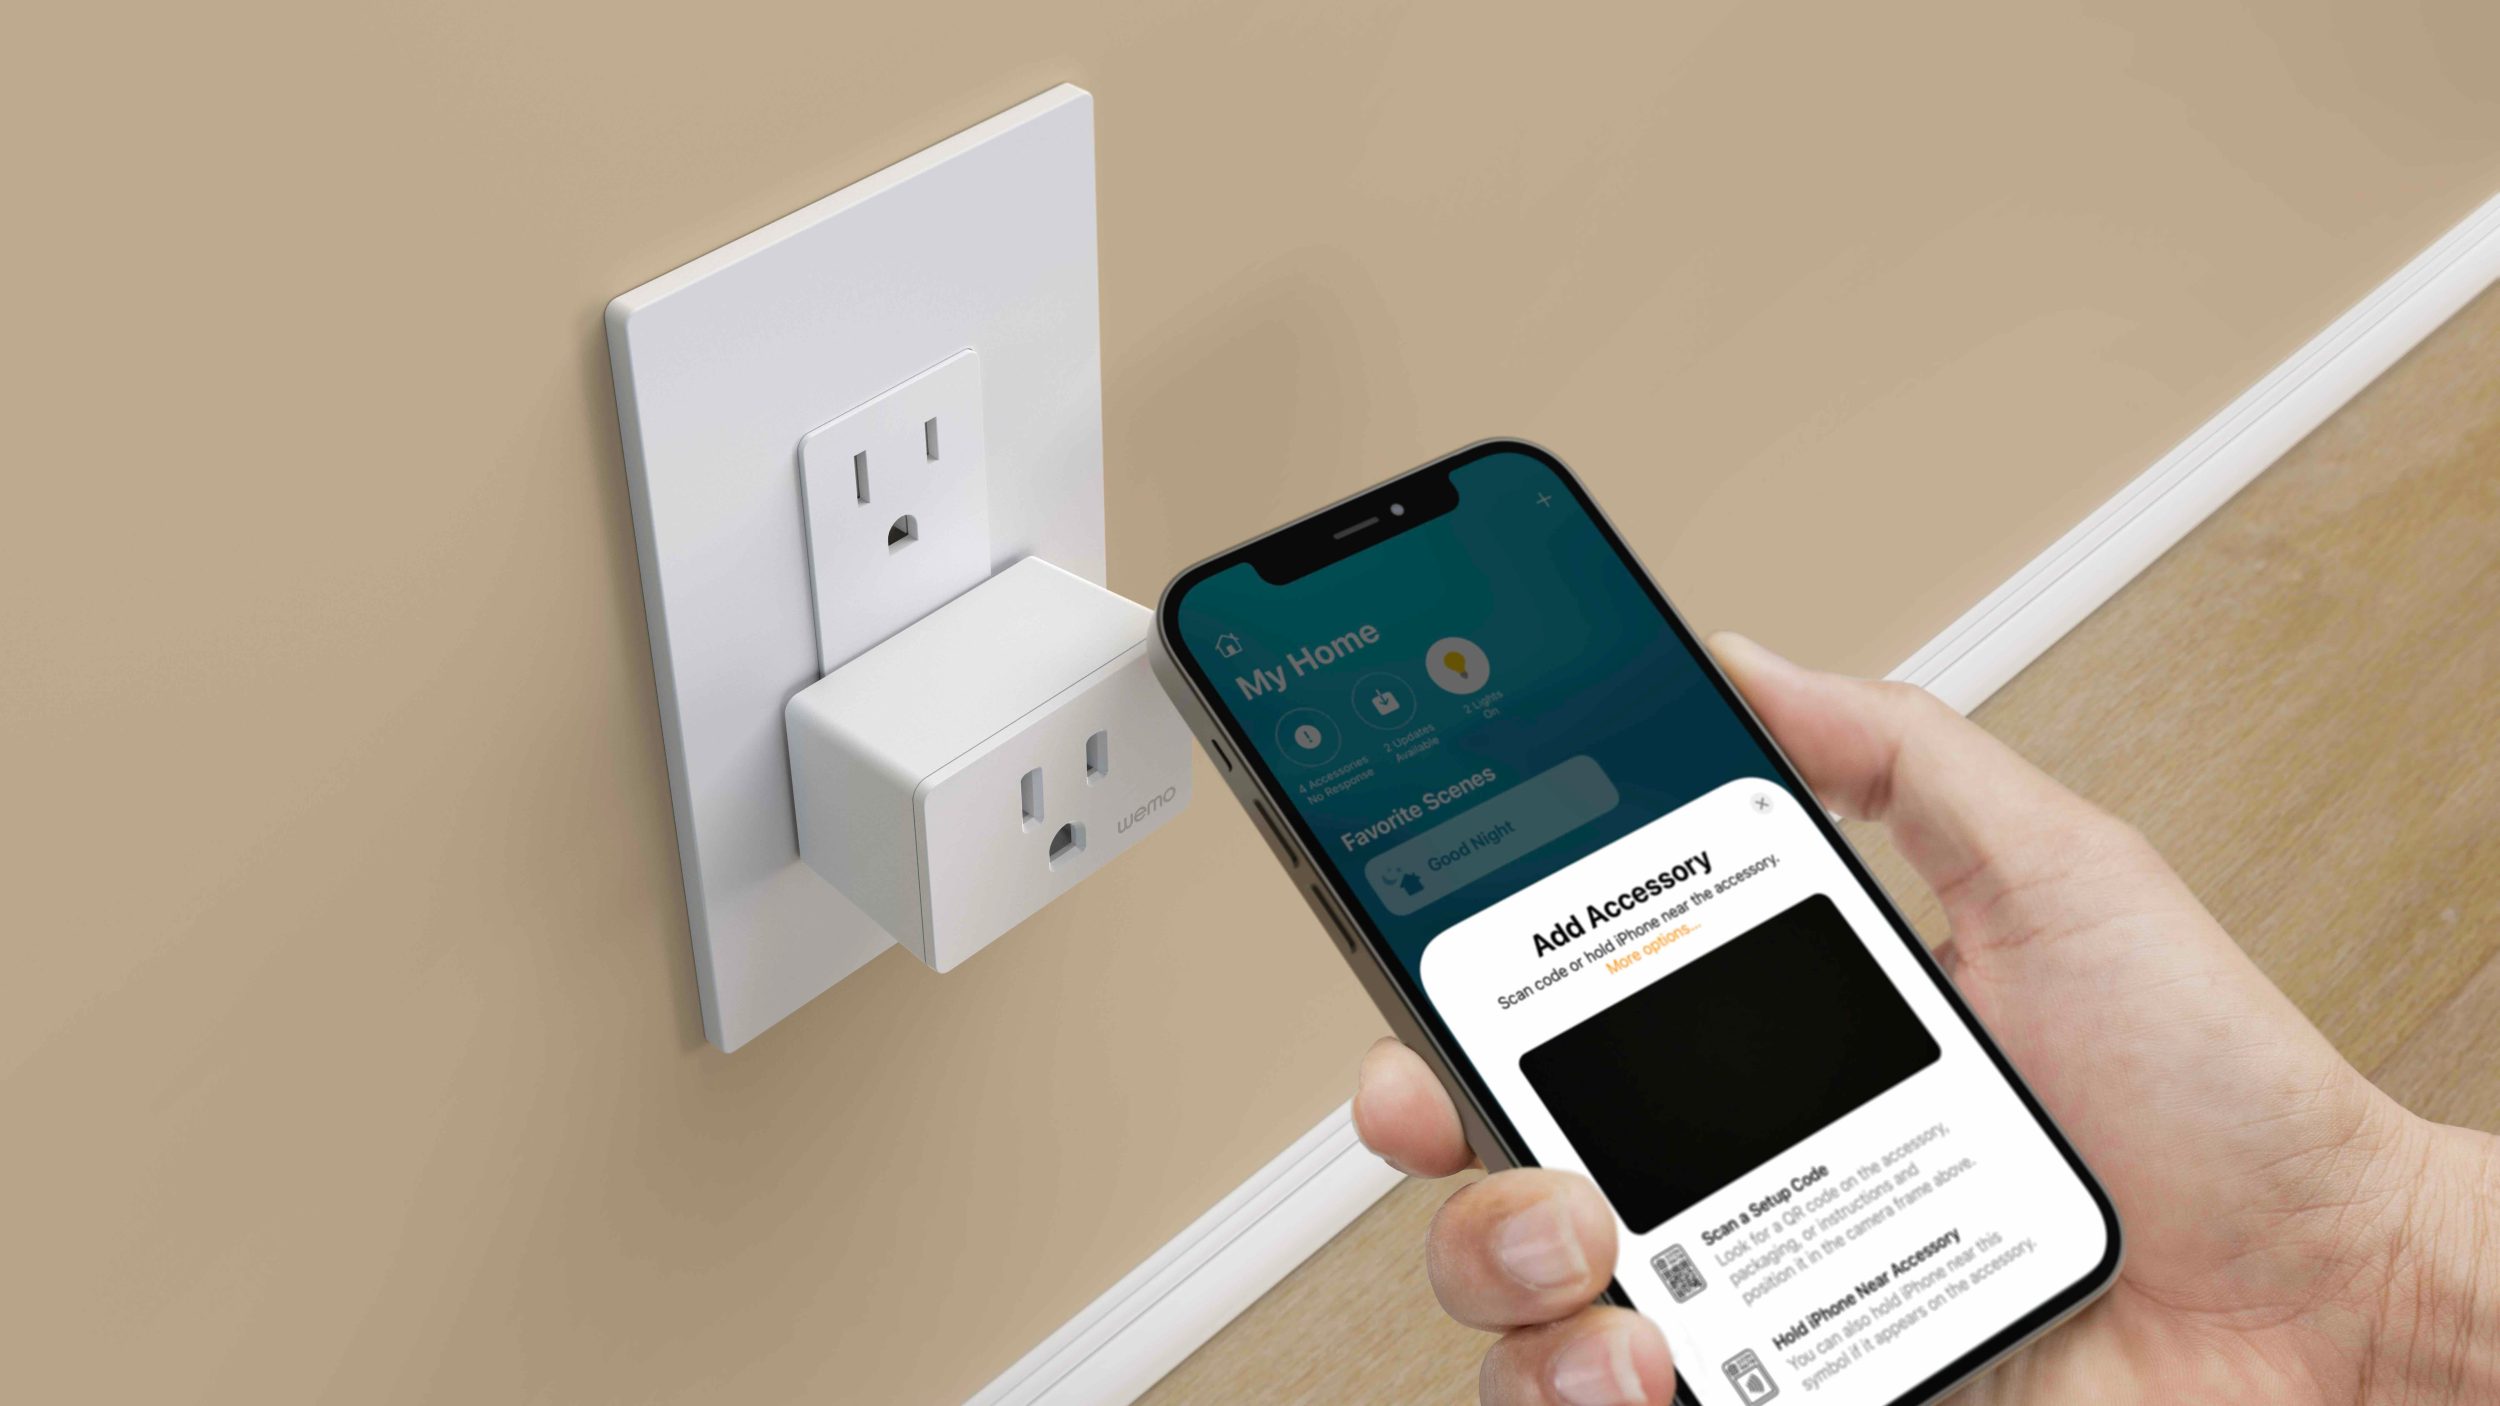 Philips Hue Smart Plug - First Look - Homekit News and Reviews